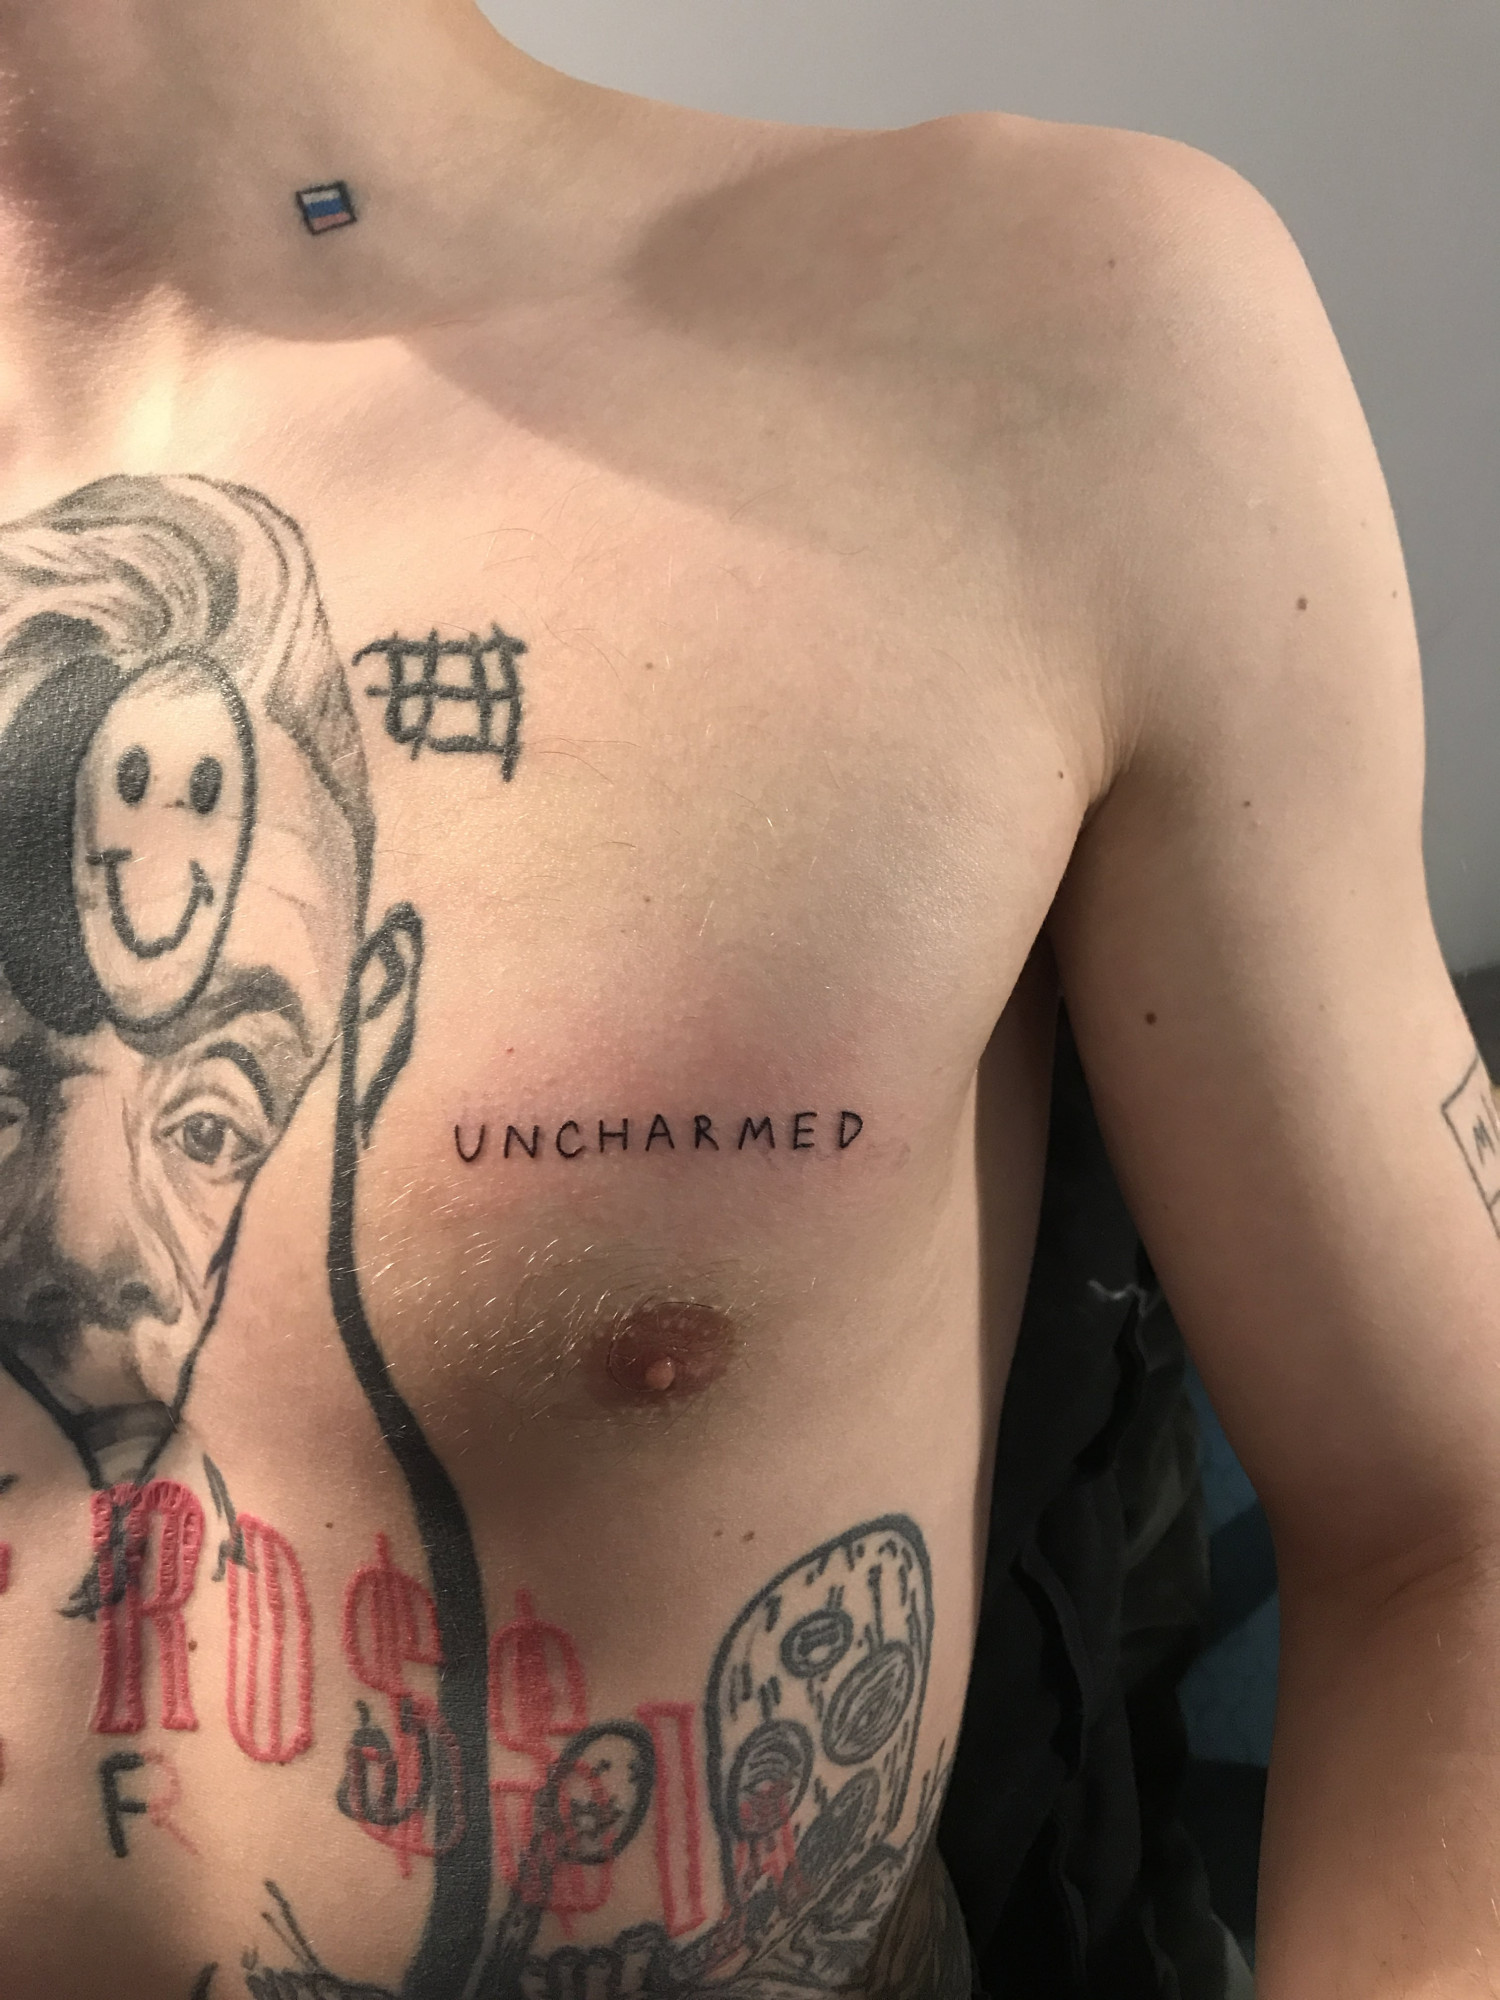 UNCHARMED tattoo